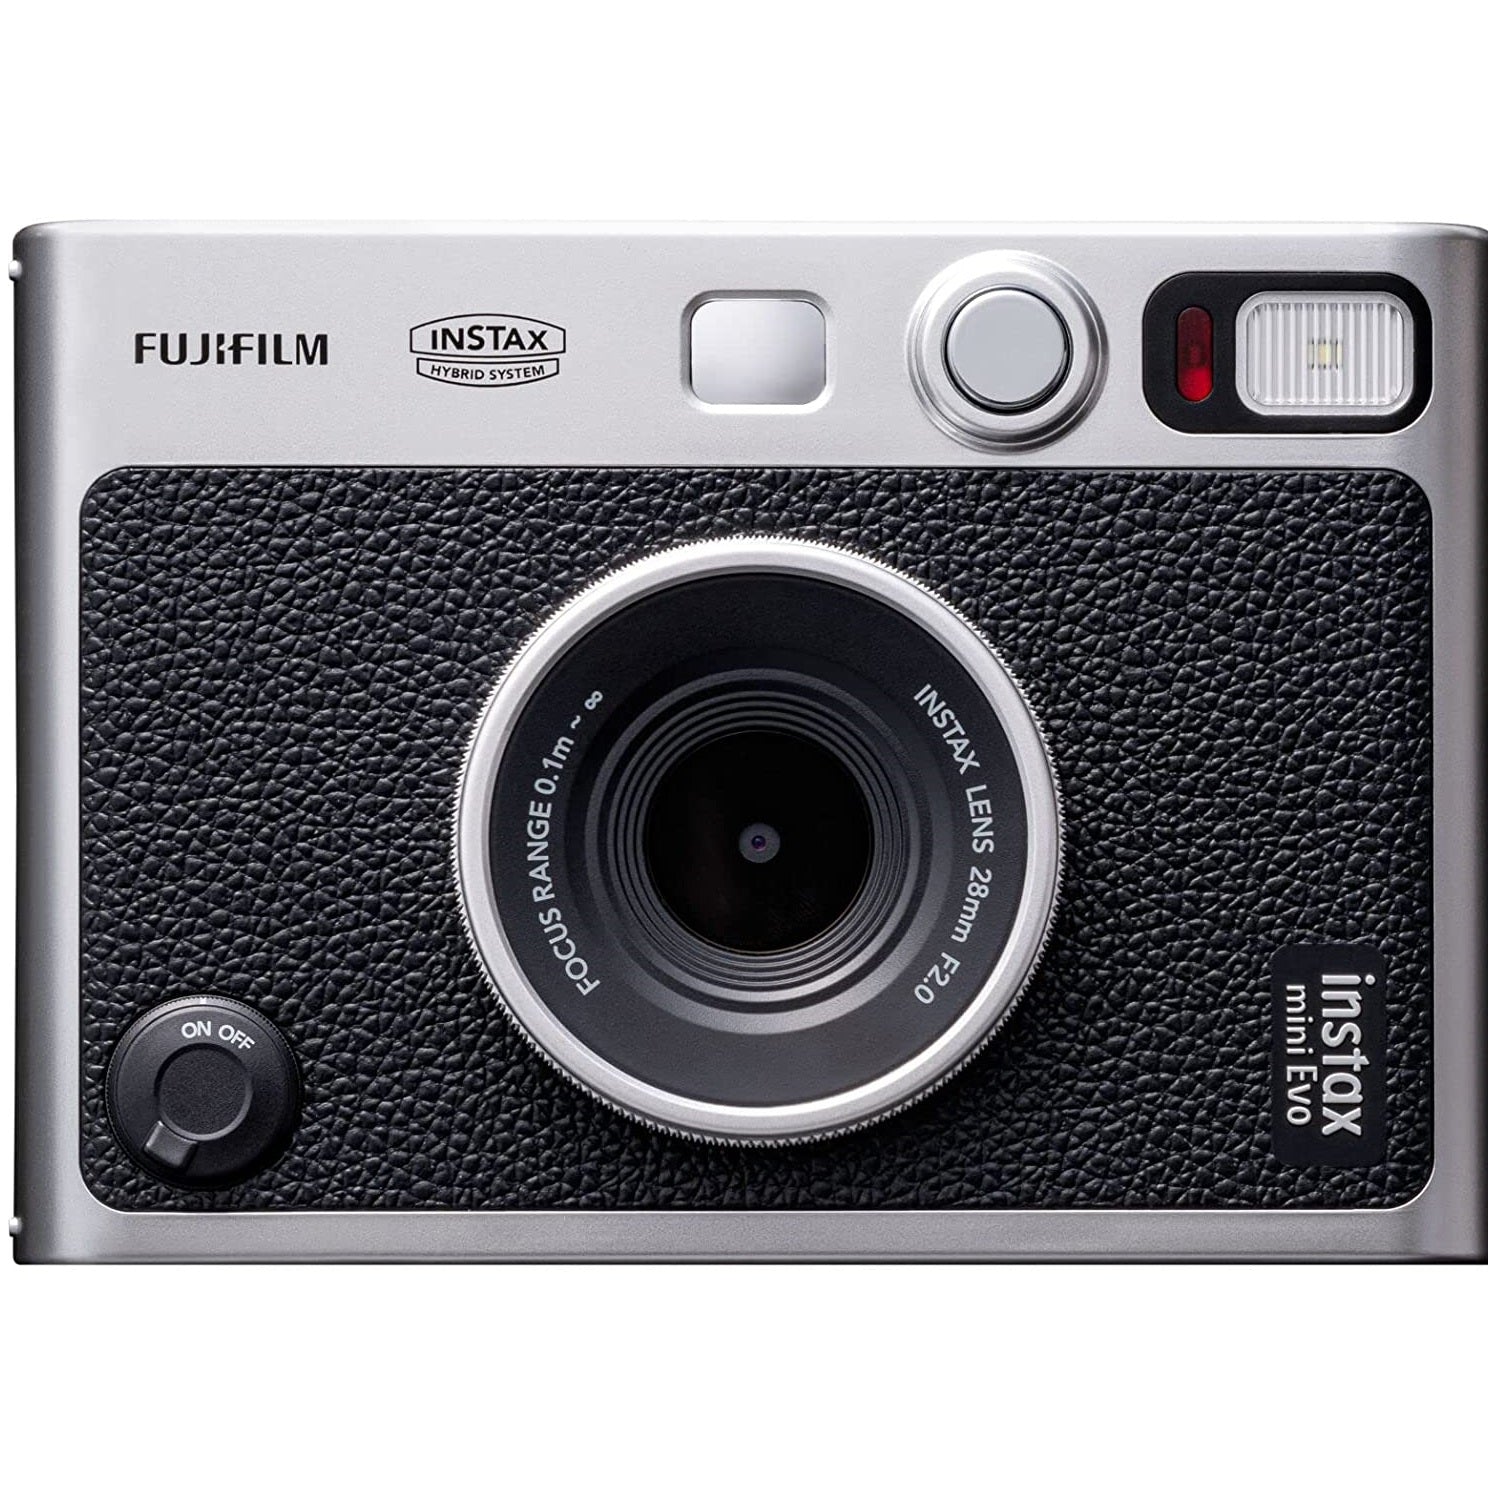 Fujifilm Instax Mini EVO Instant Camera